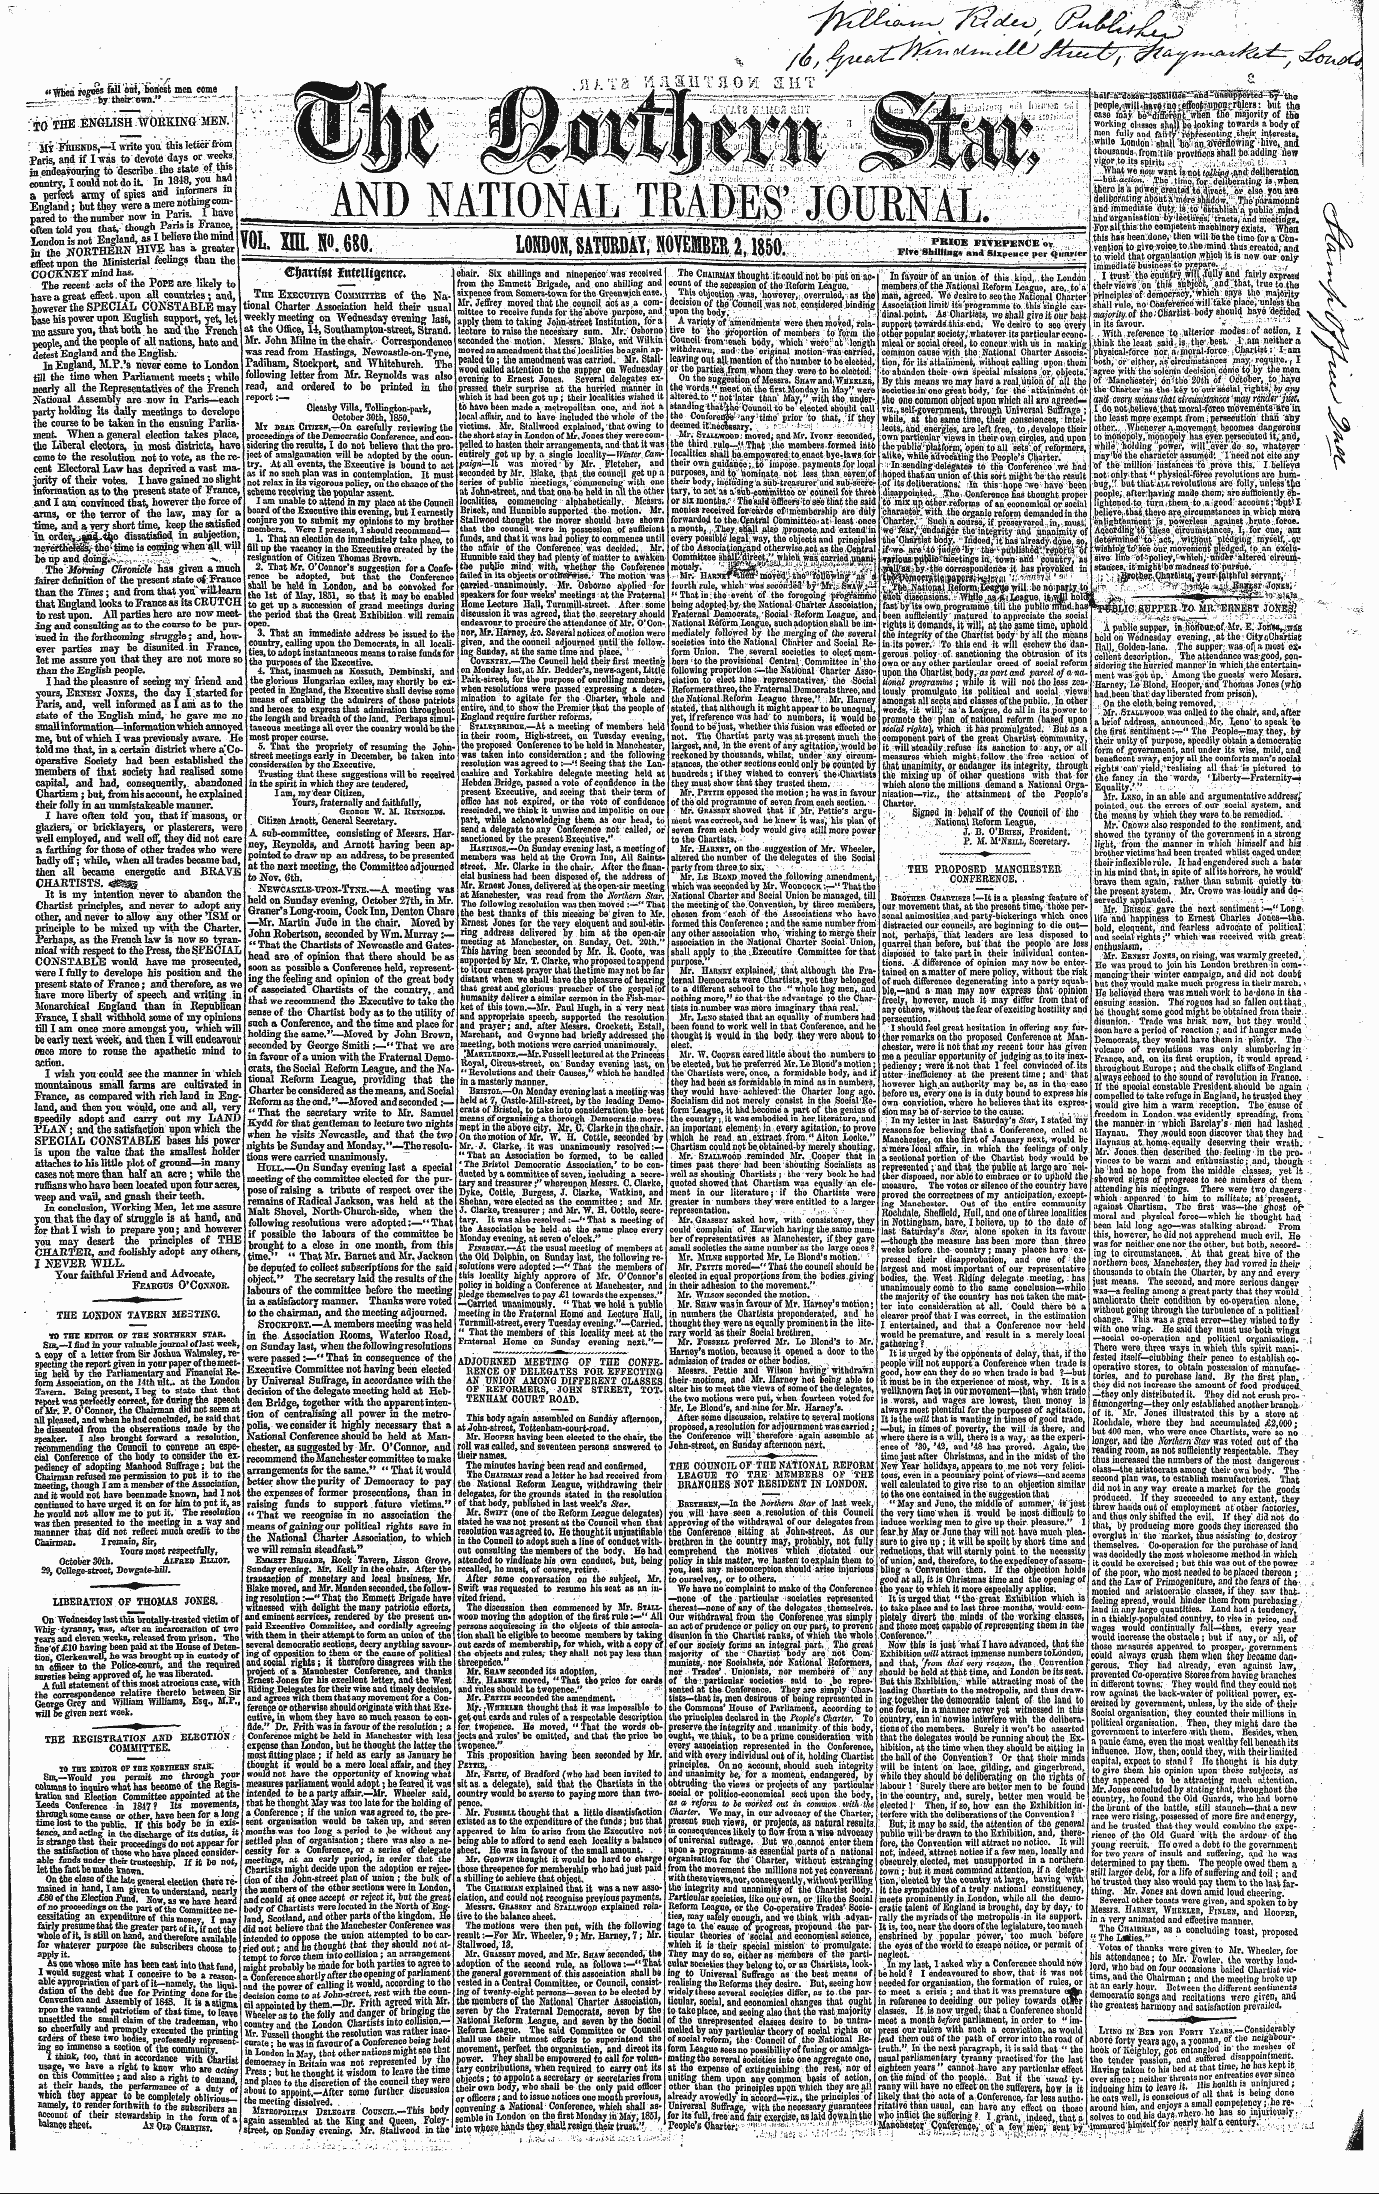 Northern Star (1837-1852): jS F Y, 2nd edition - Liberation Of Thomas Jones. - On Wednesd...